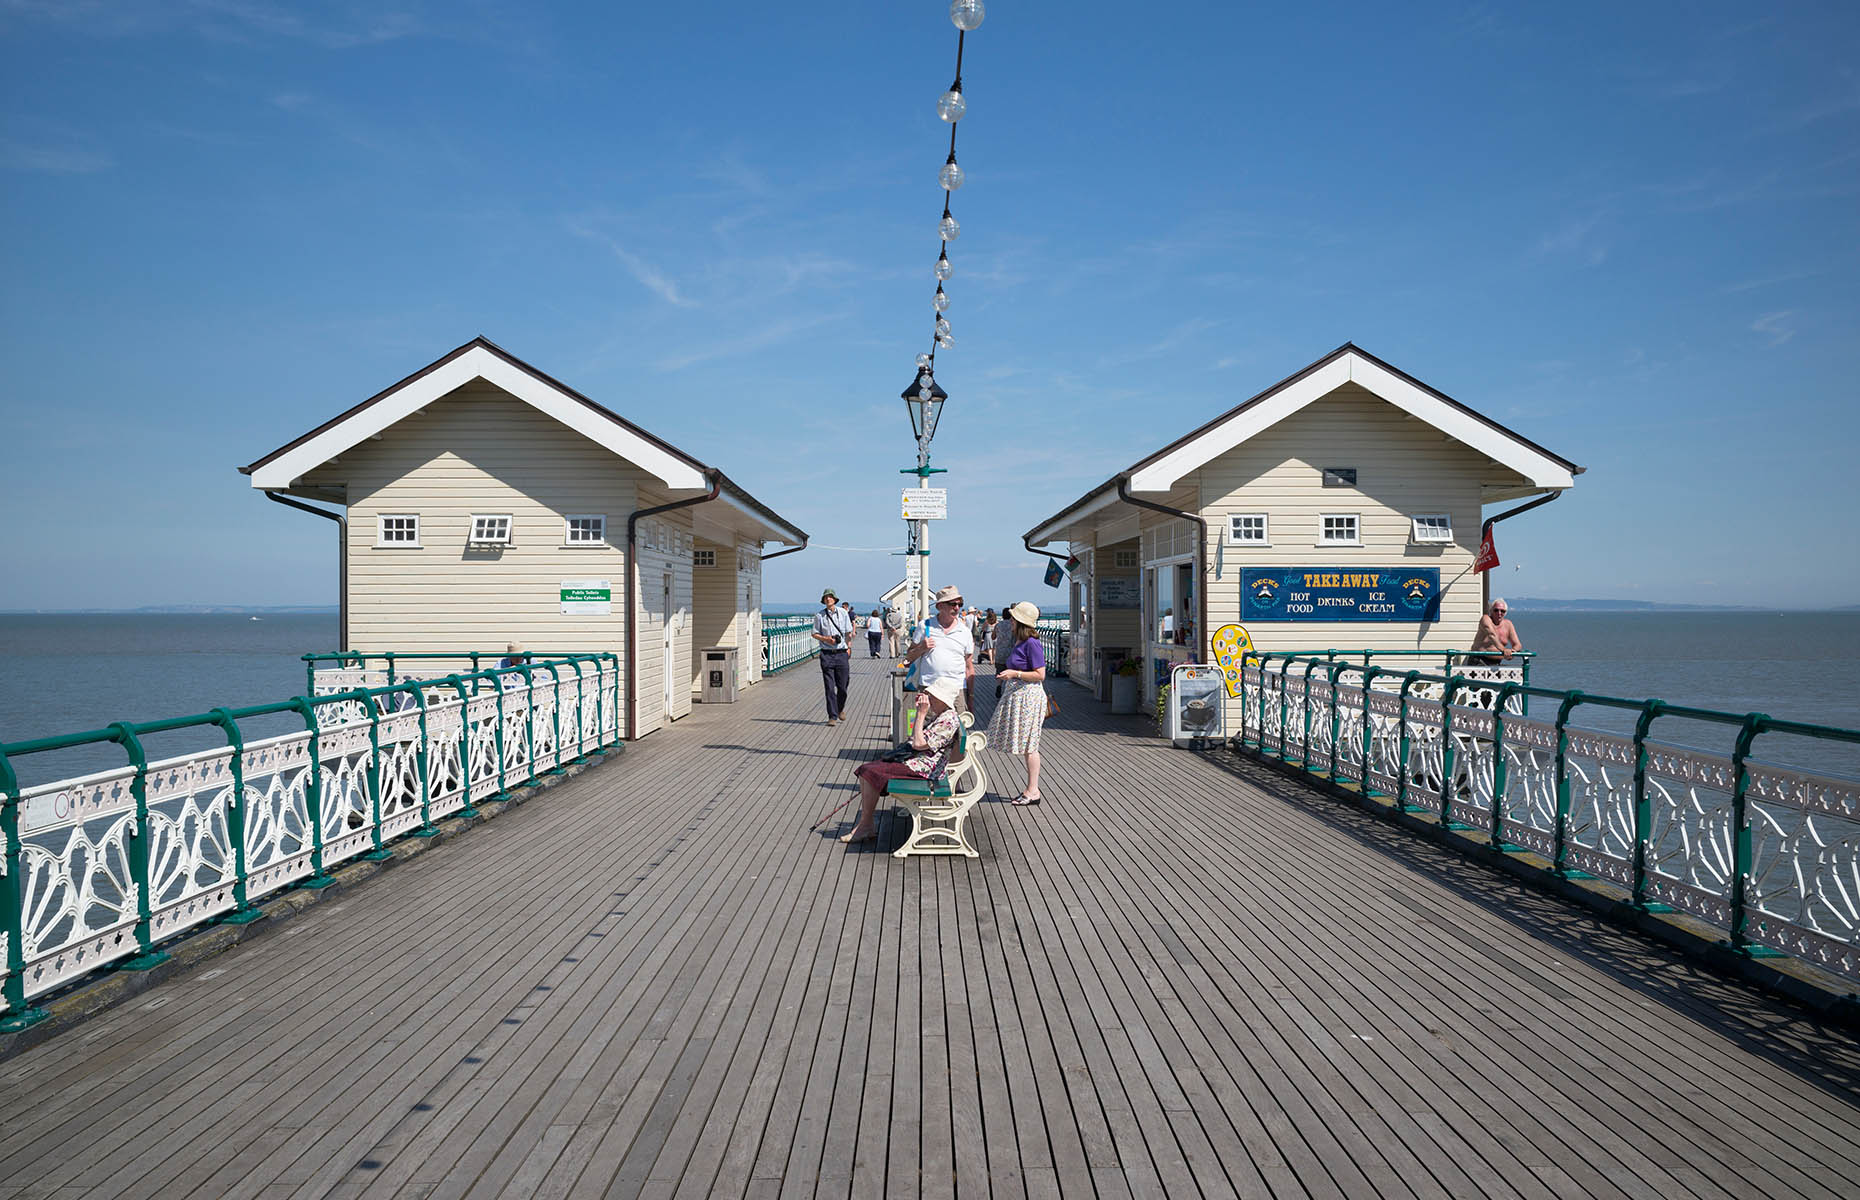 Penarth pier (Image: Richard Bradford/Shutterstock)